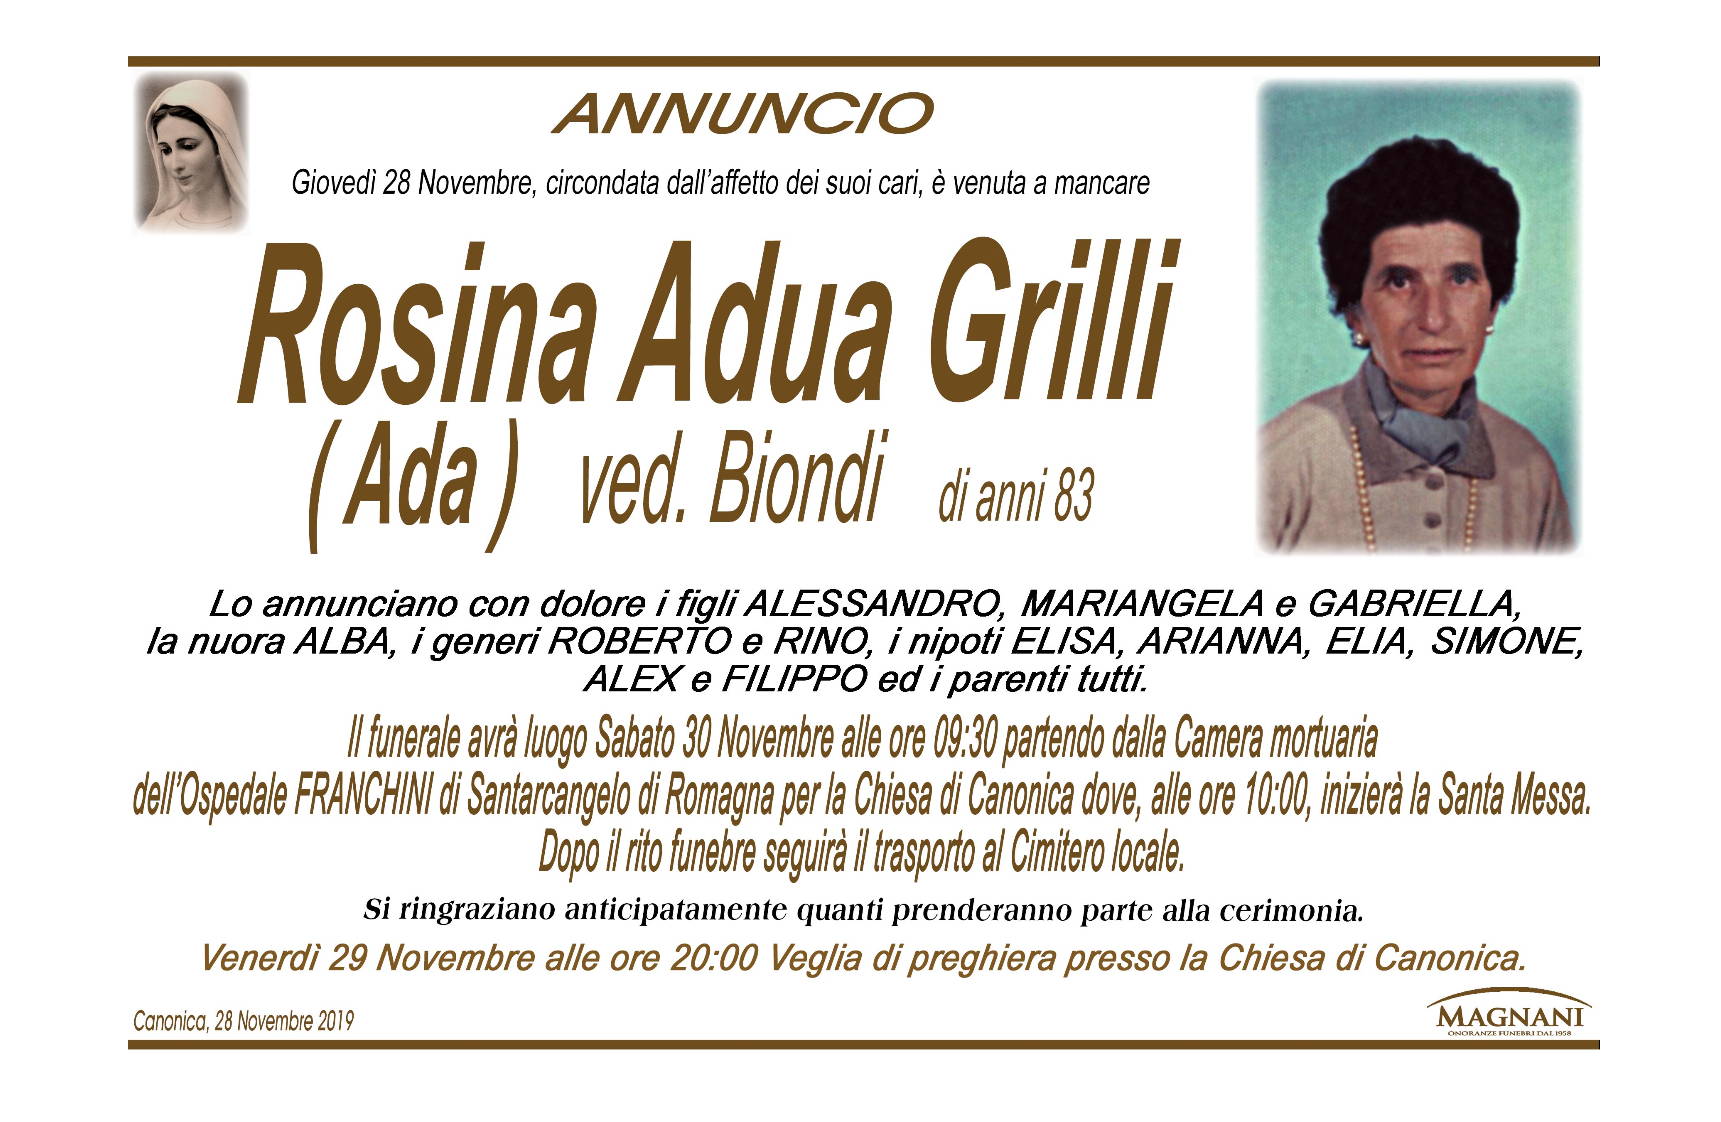 Rosina Adua Grilli